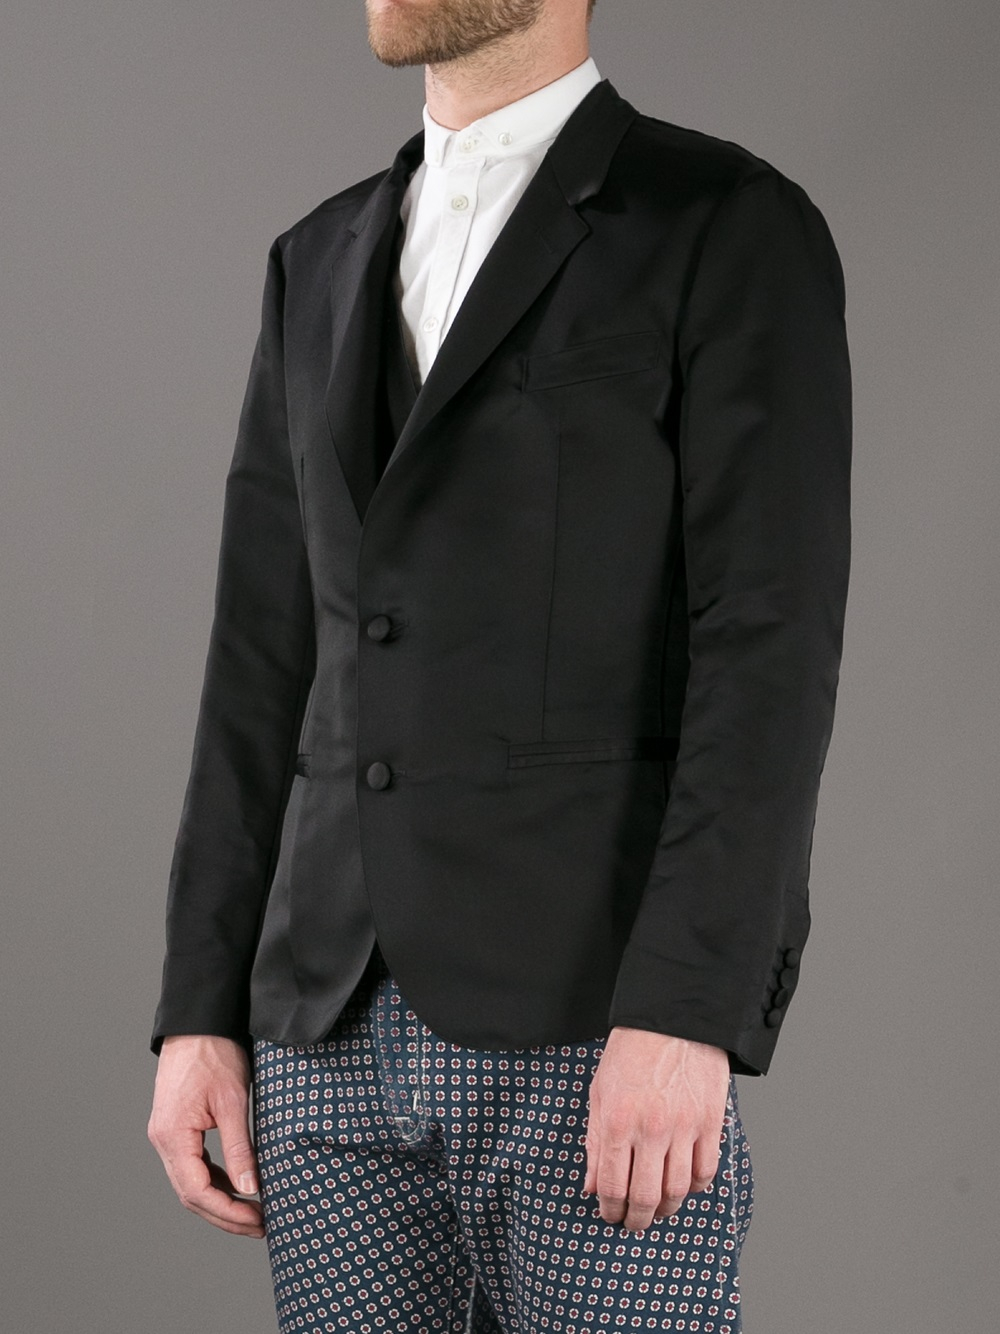 Dolce & Gabbana Casual Dinner Jacket in Black for Men - Lyst